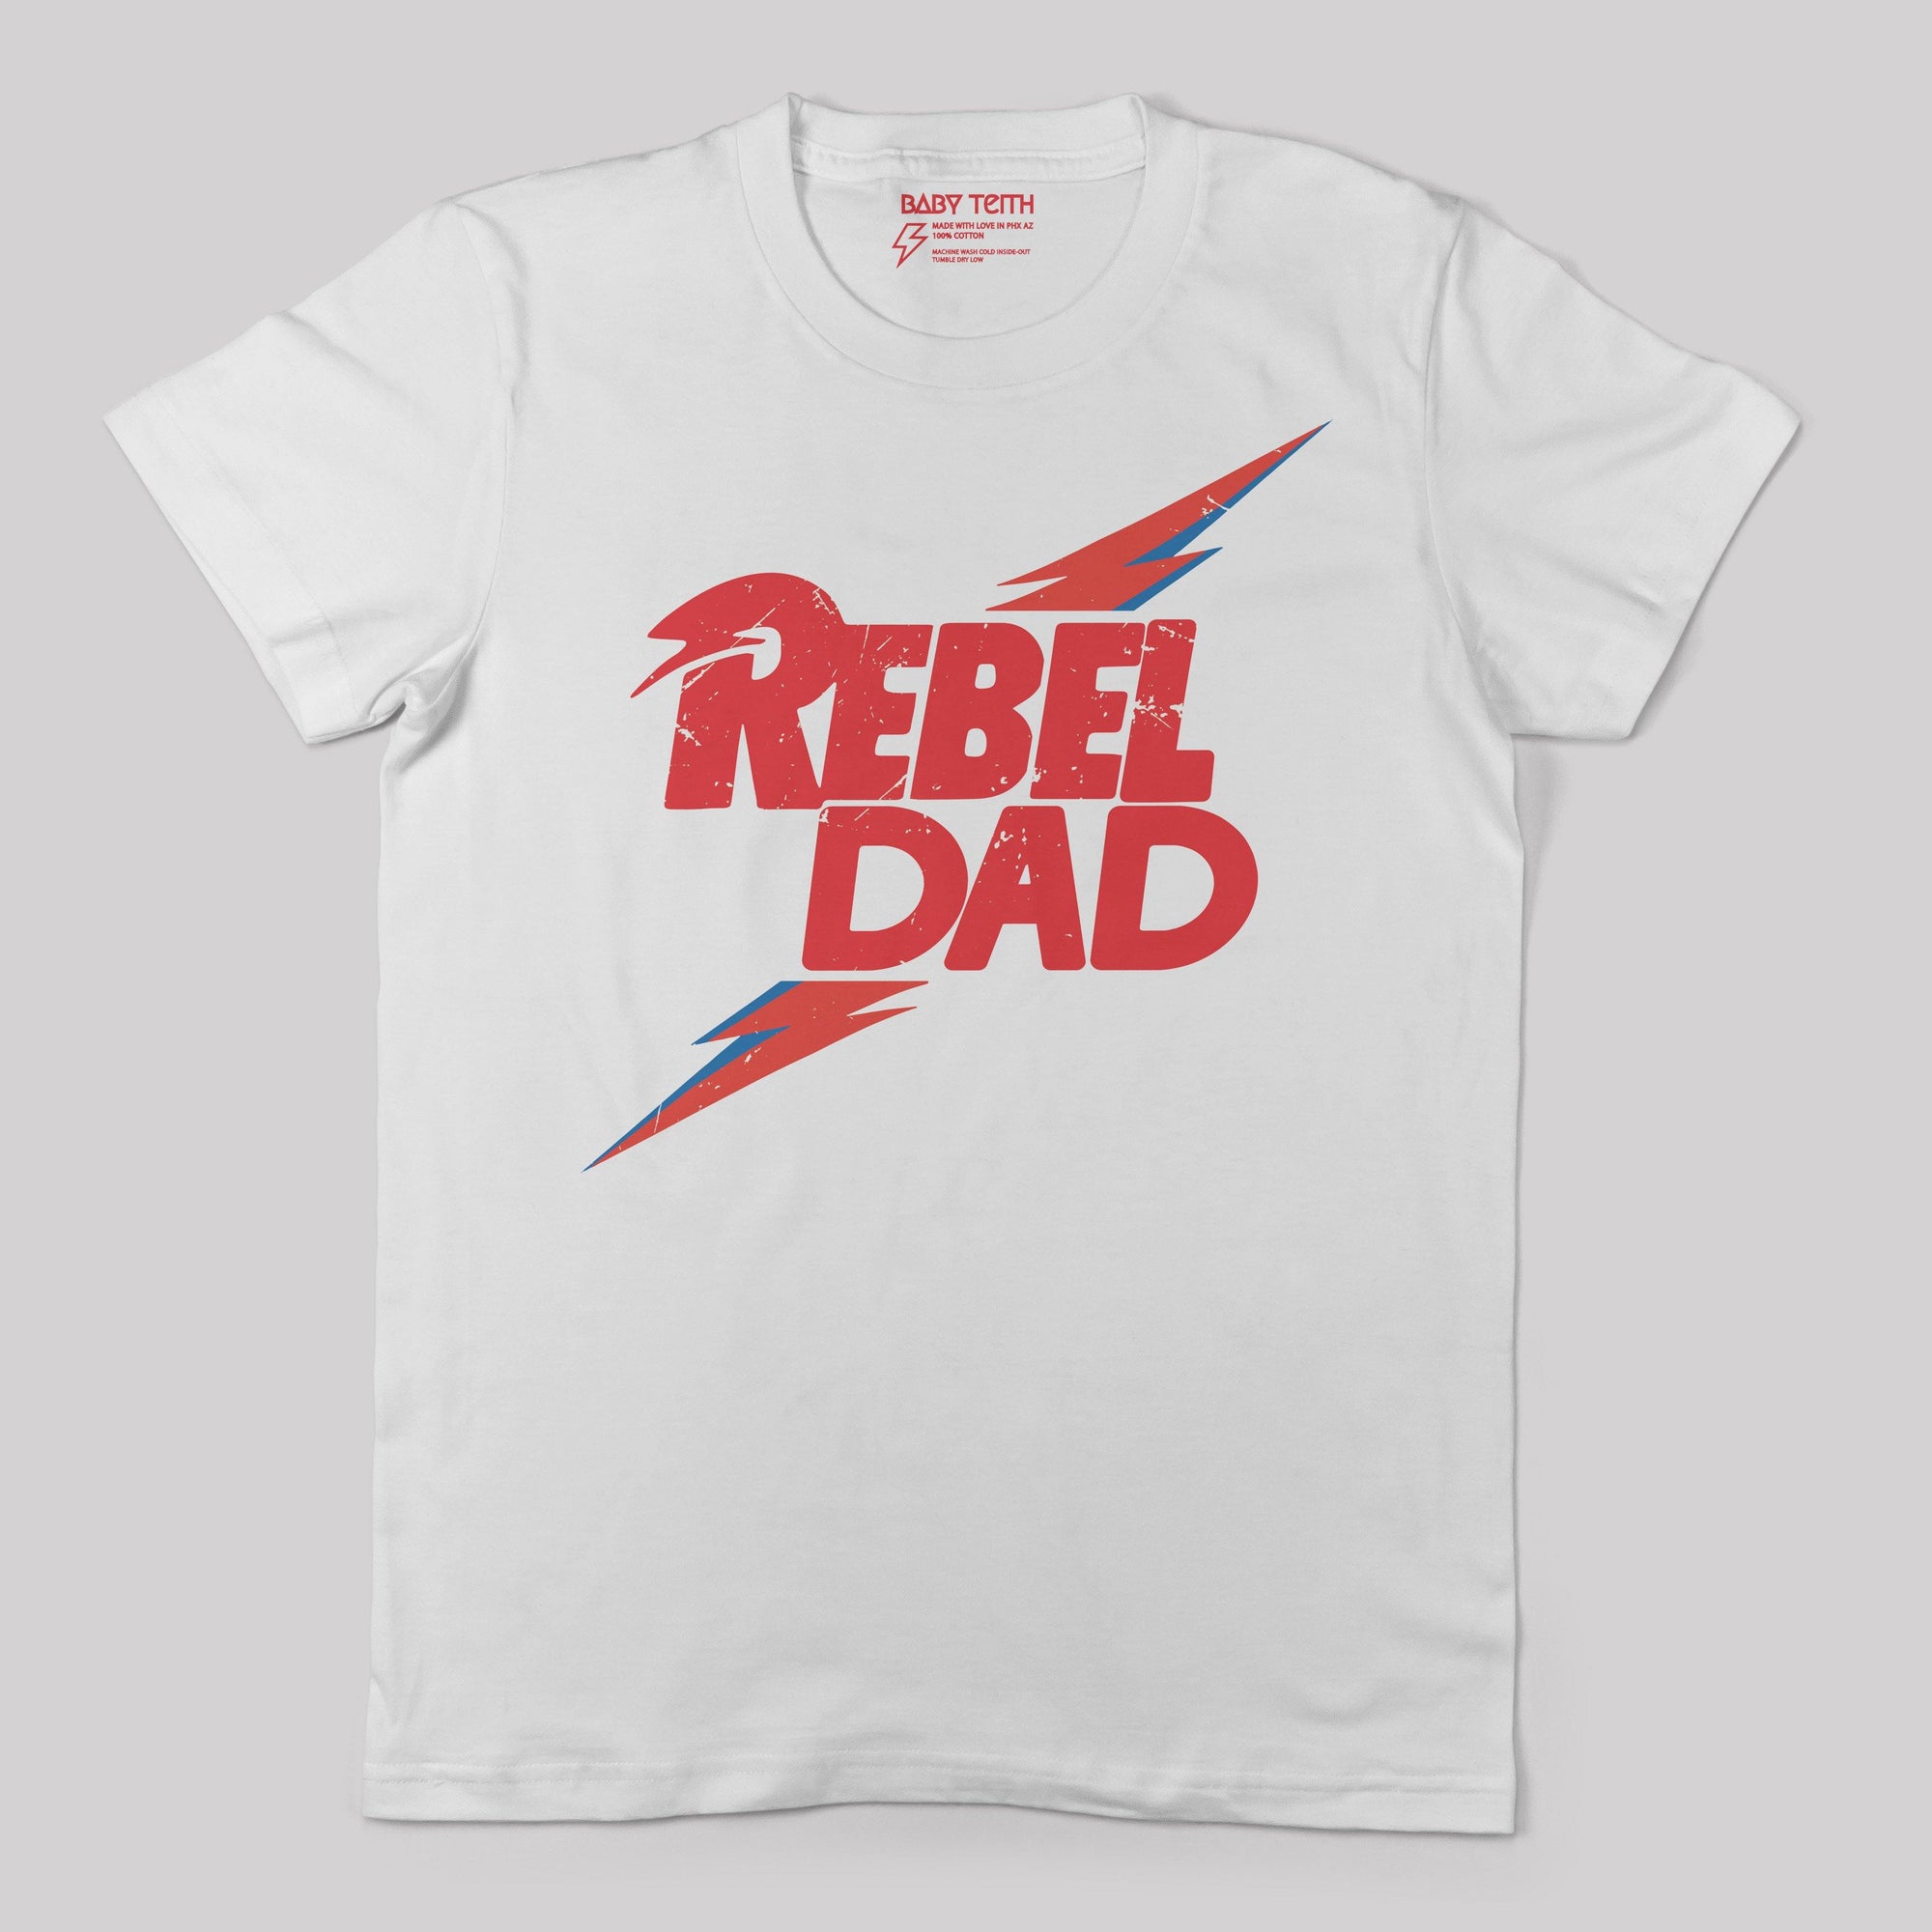 Rebel Dad Tee - Unisex Fit (2 Colors) - Baby Teith